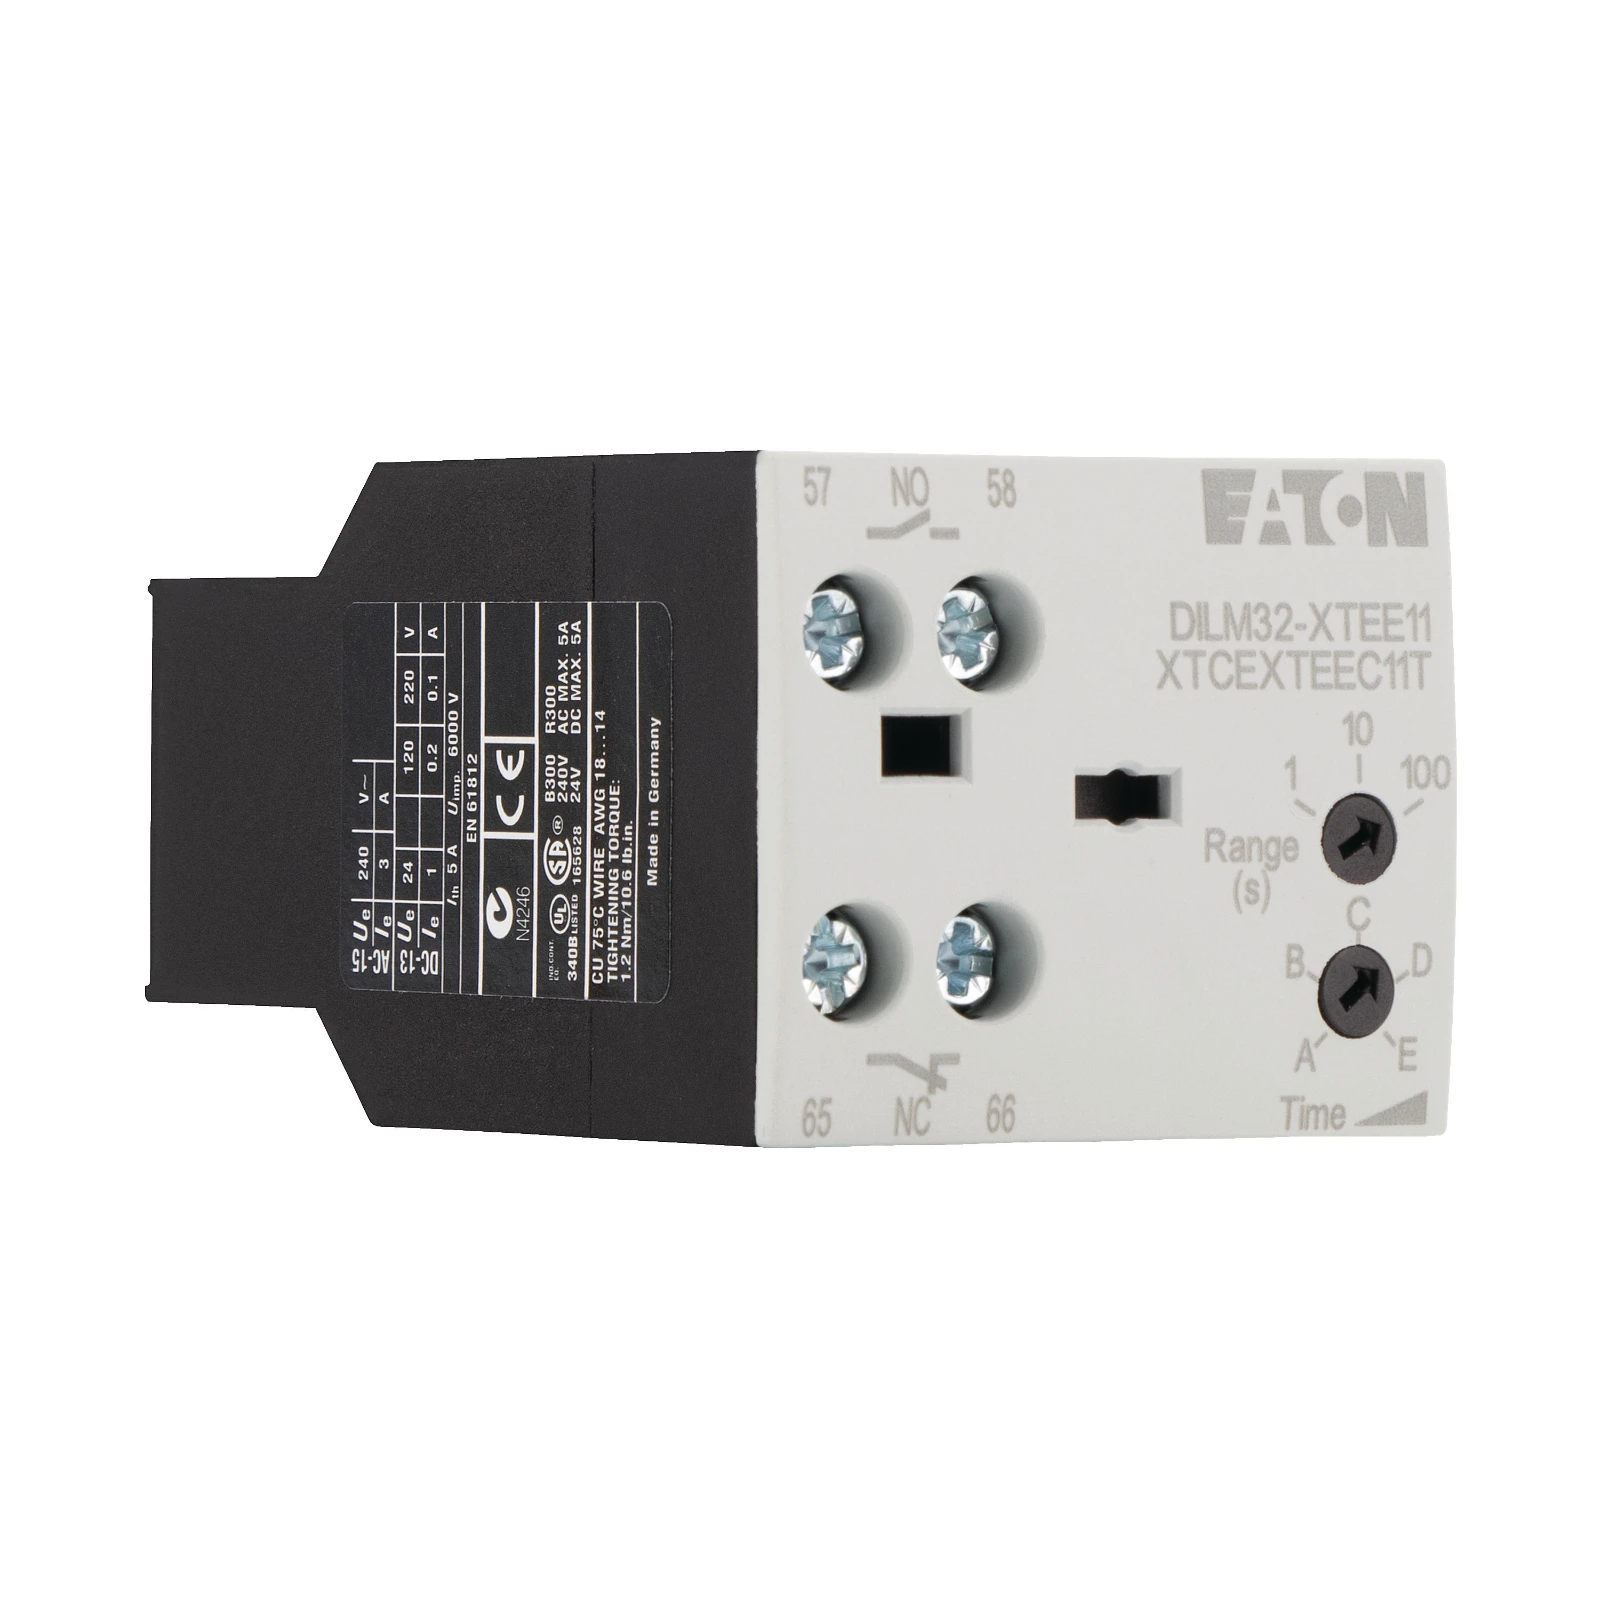 2062803 - Eaton DILM32-XTEE11(RAC130)